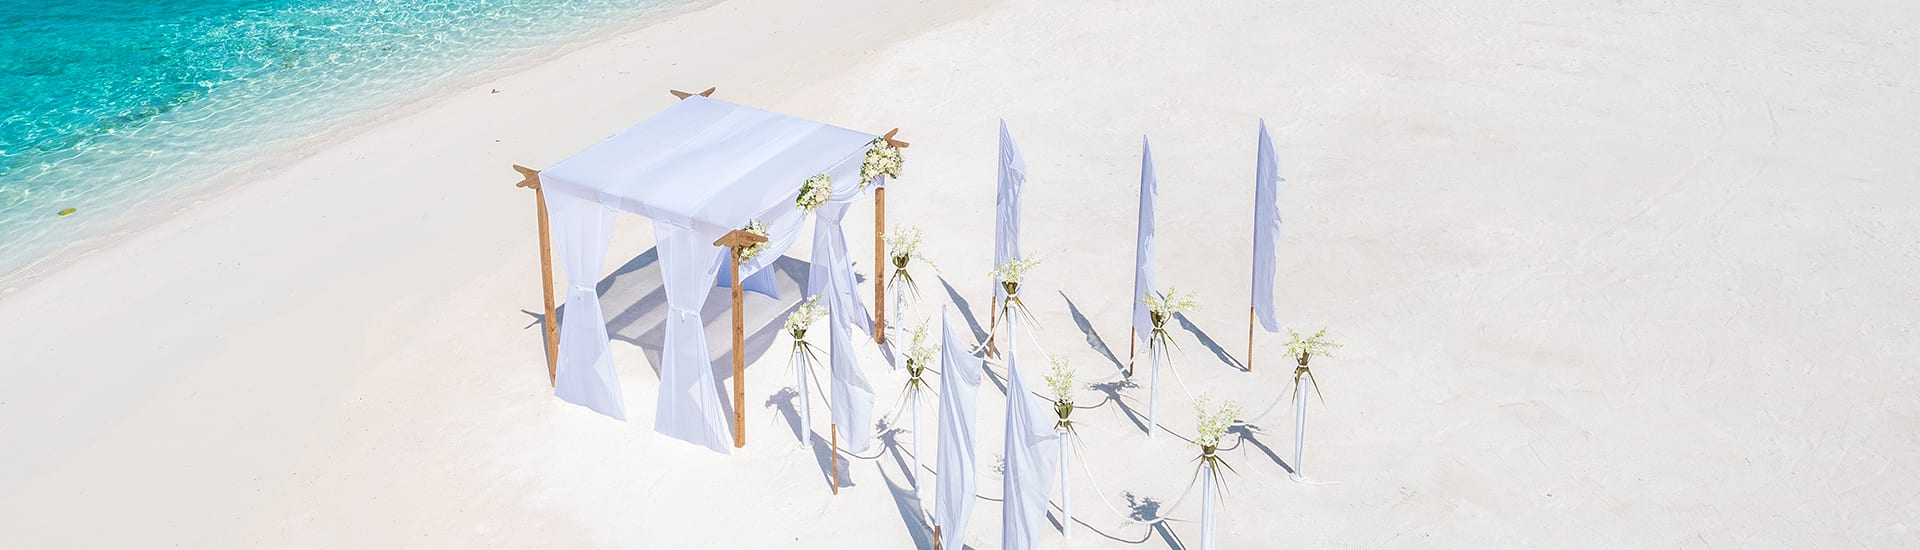 Naladhu Private Islands Maldives Beach Wedding Setup